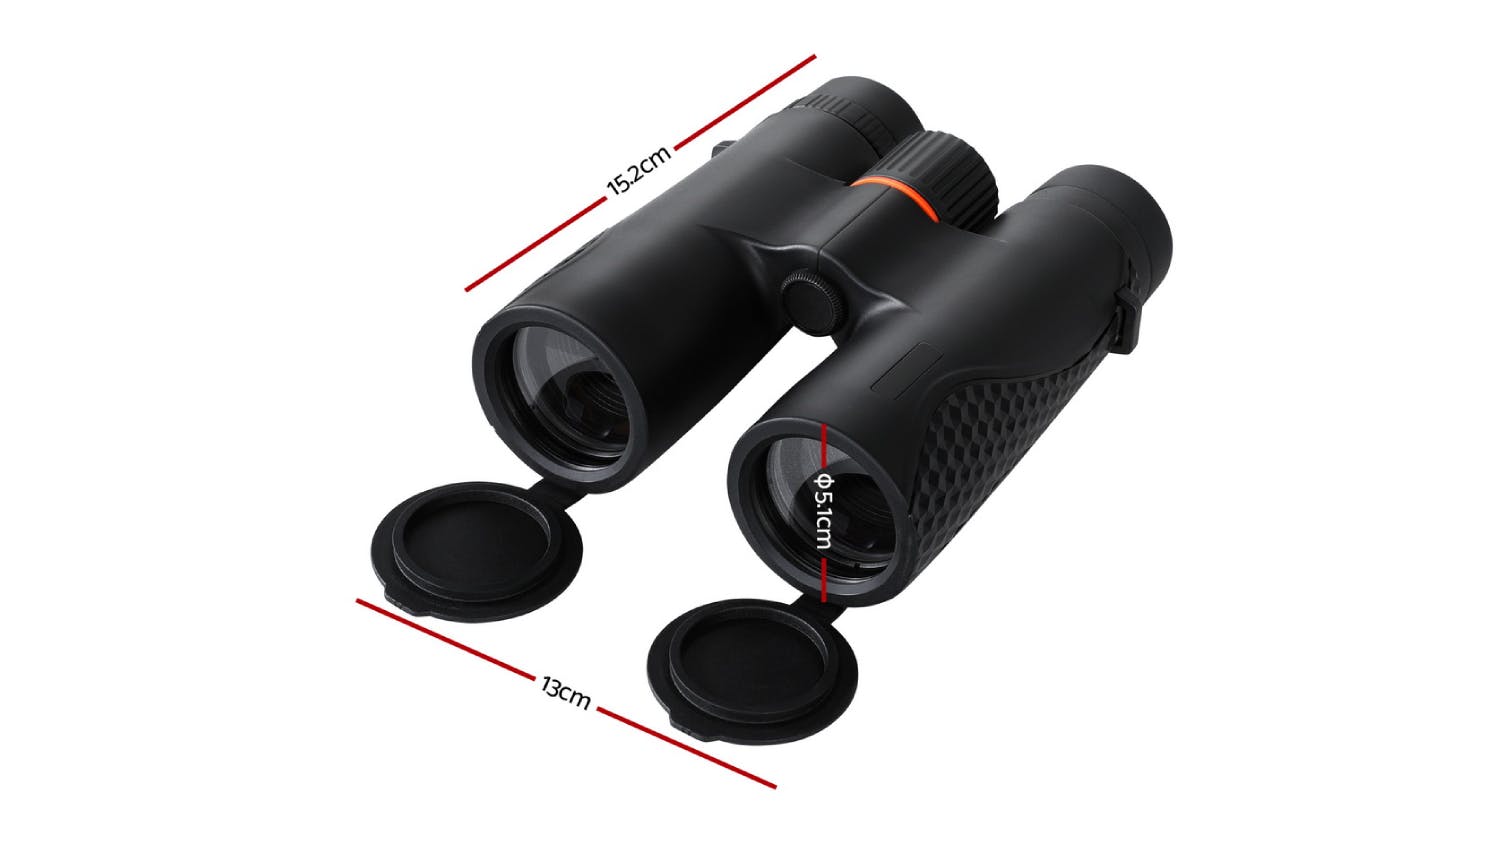 New Aim Precision Optic Binoculars